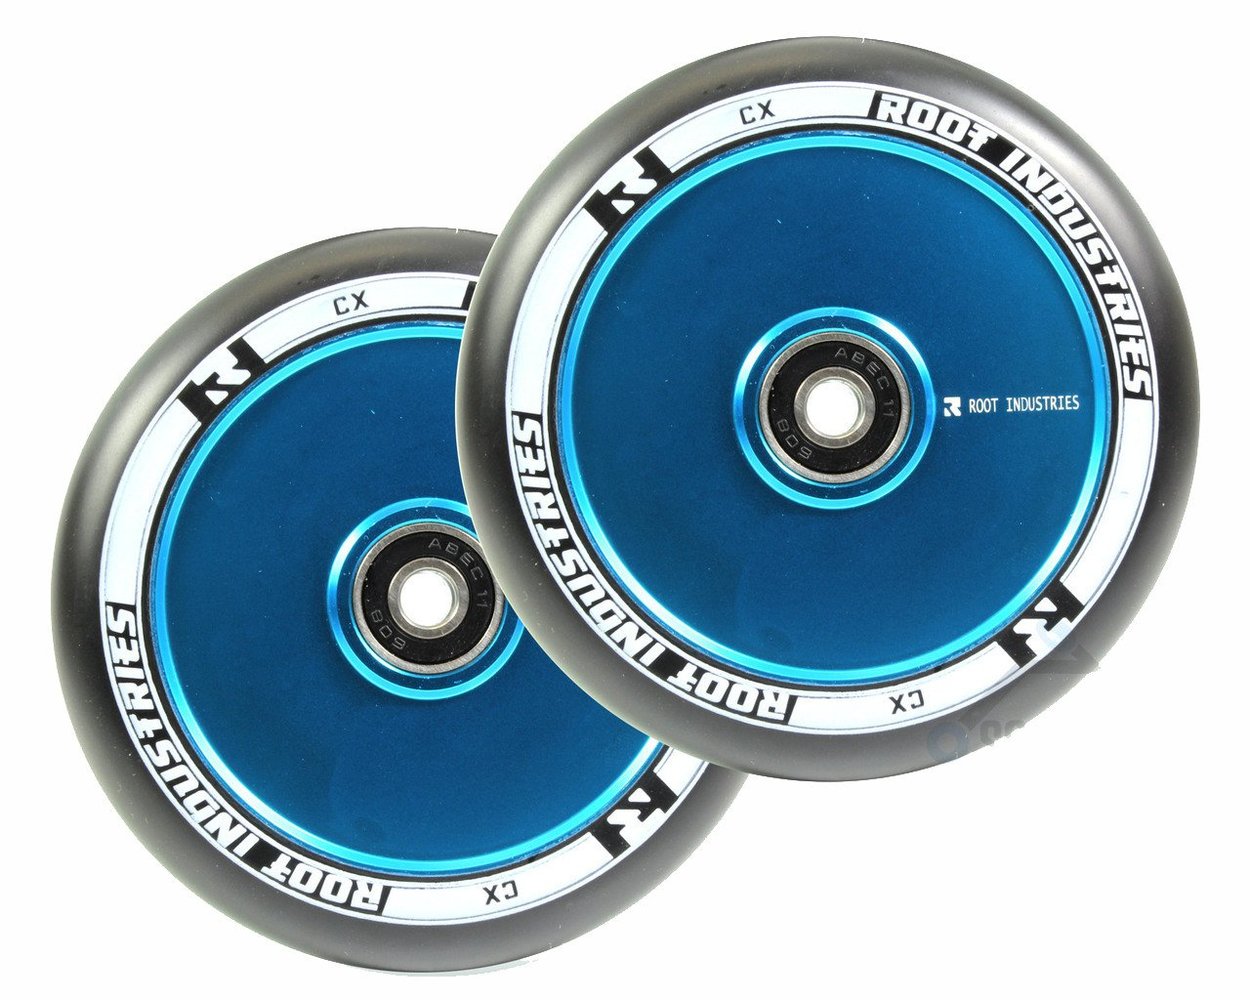 Root Industries Air Scooter Wheels - Black/Blue (Set of 2)